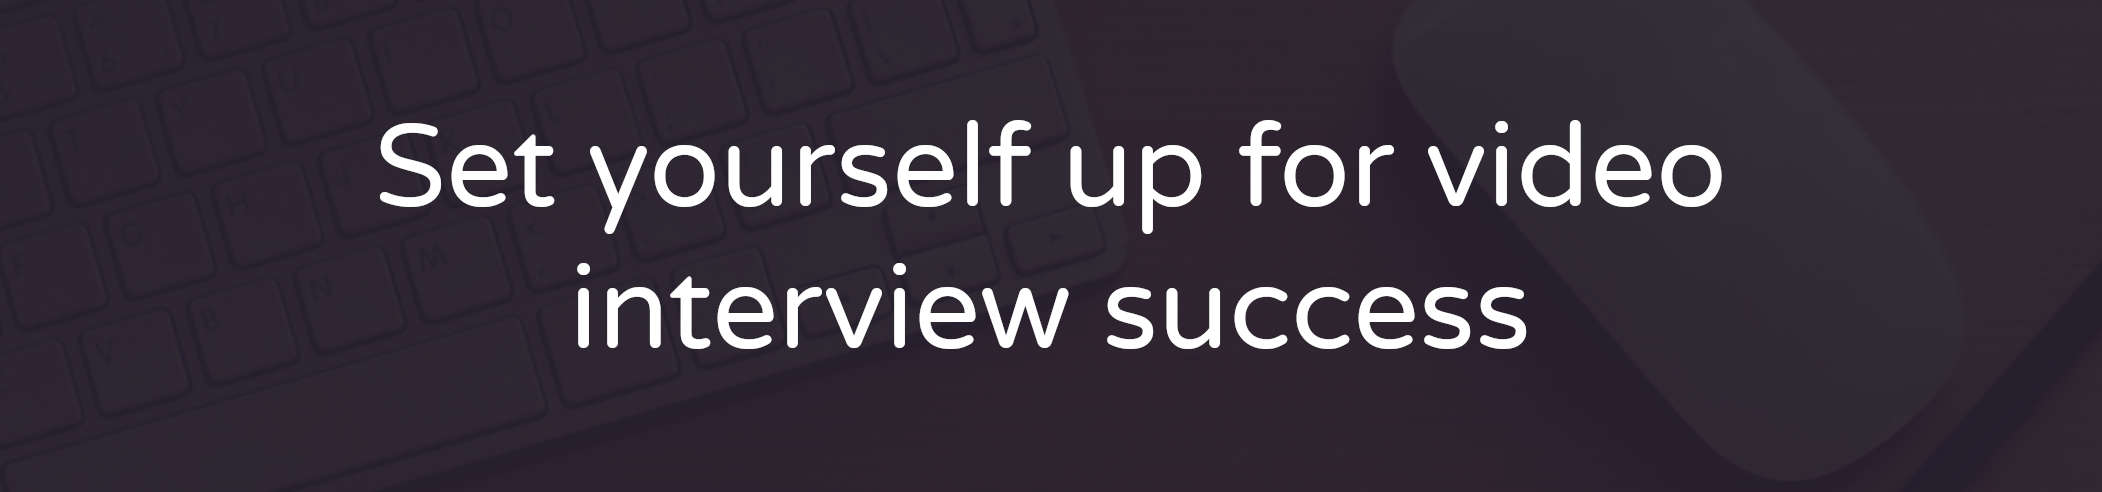 Interview success